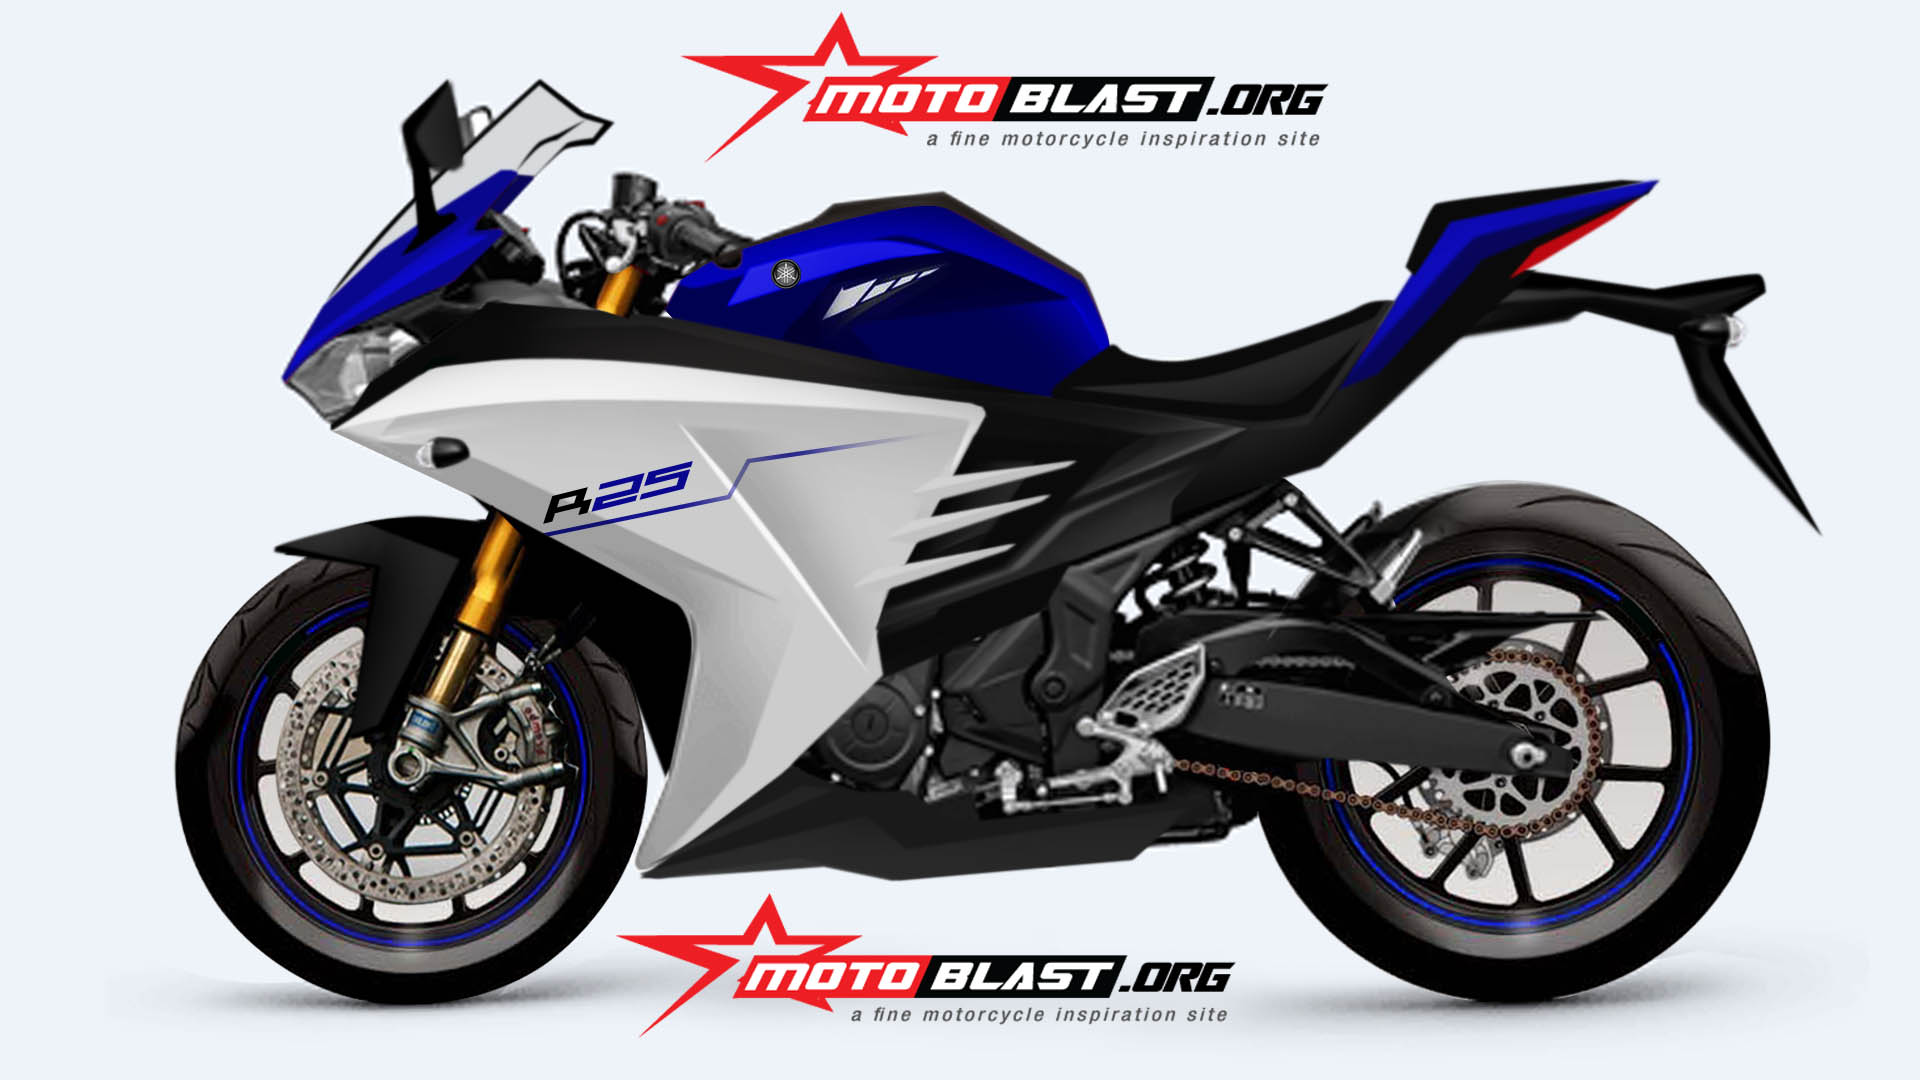 Dua Desain Awal Motoblast Yang Gak Jadi Di Masukkan Dalam Yamaha